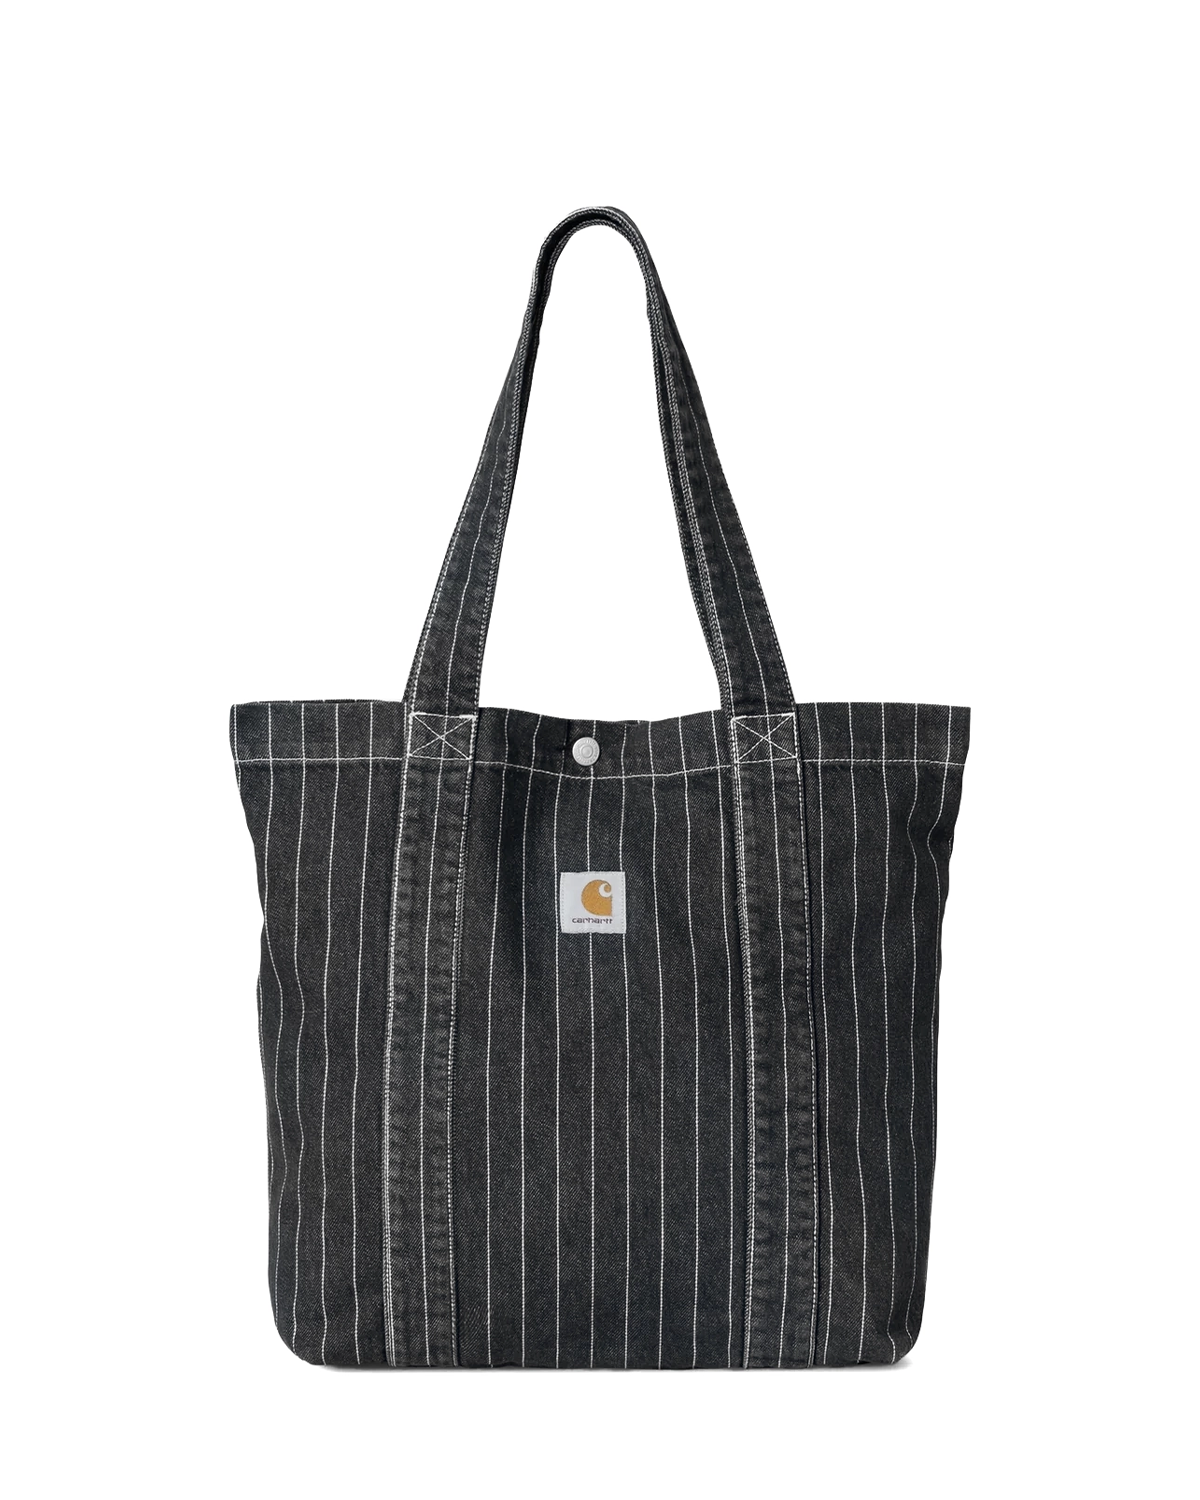 Orlean Tote Bag Orlean Stripe/Black/White (Stone Washed)